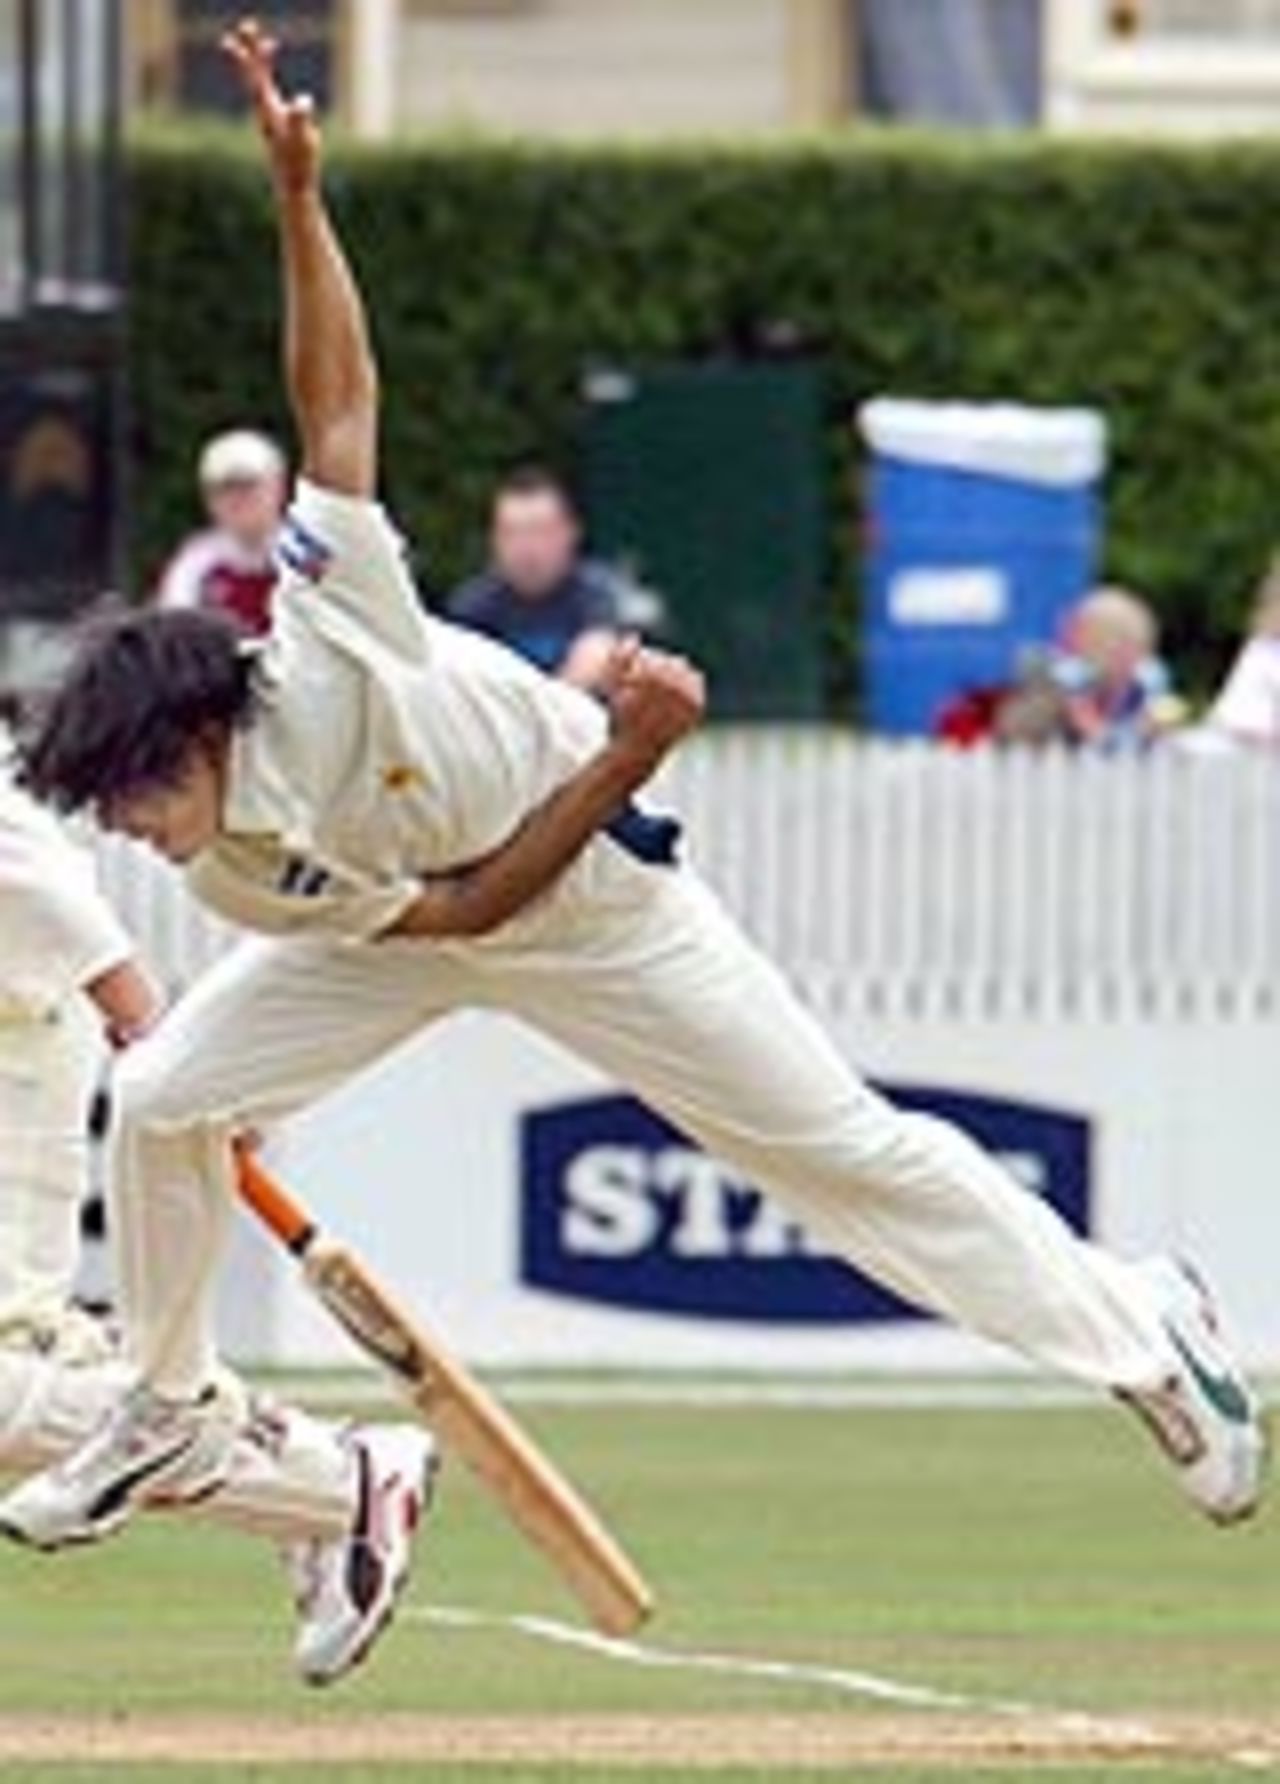 Mohammad Sami unleashes himself, New Zealand v Pakistan, 1st Test, Hamilton, 5th day, December 23, 2003